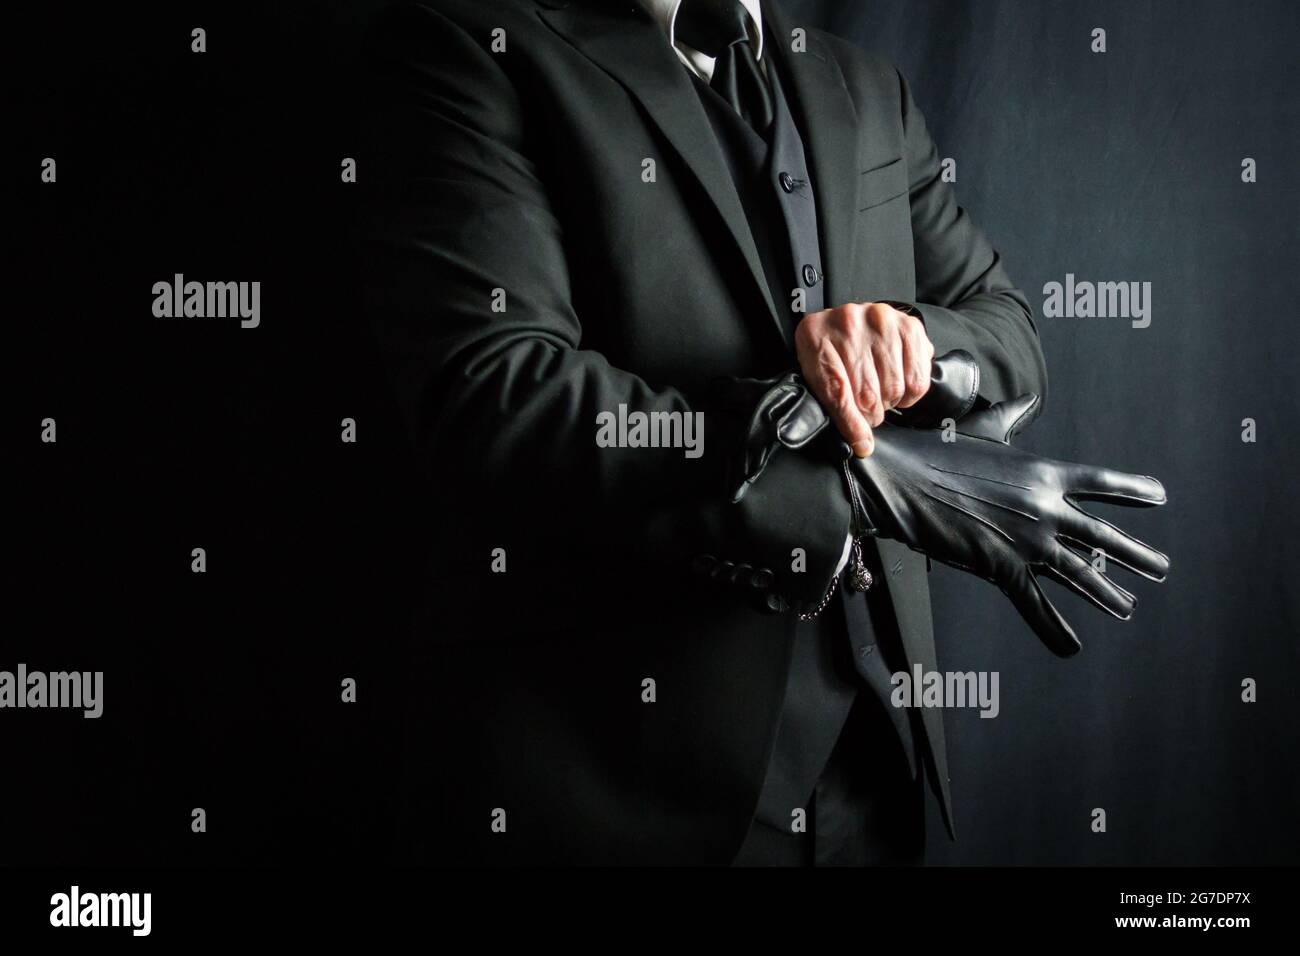 Portrait of Gentleman in Dark Suit Pulling on Black Leather Gloves on Black Background. Stylish Businessman Getting Dressed. Stock Photo